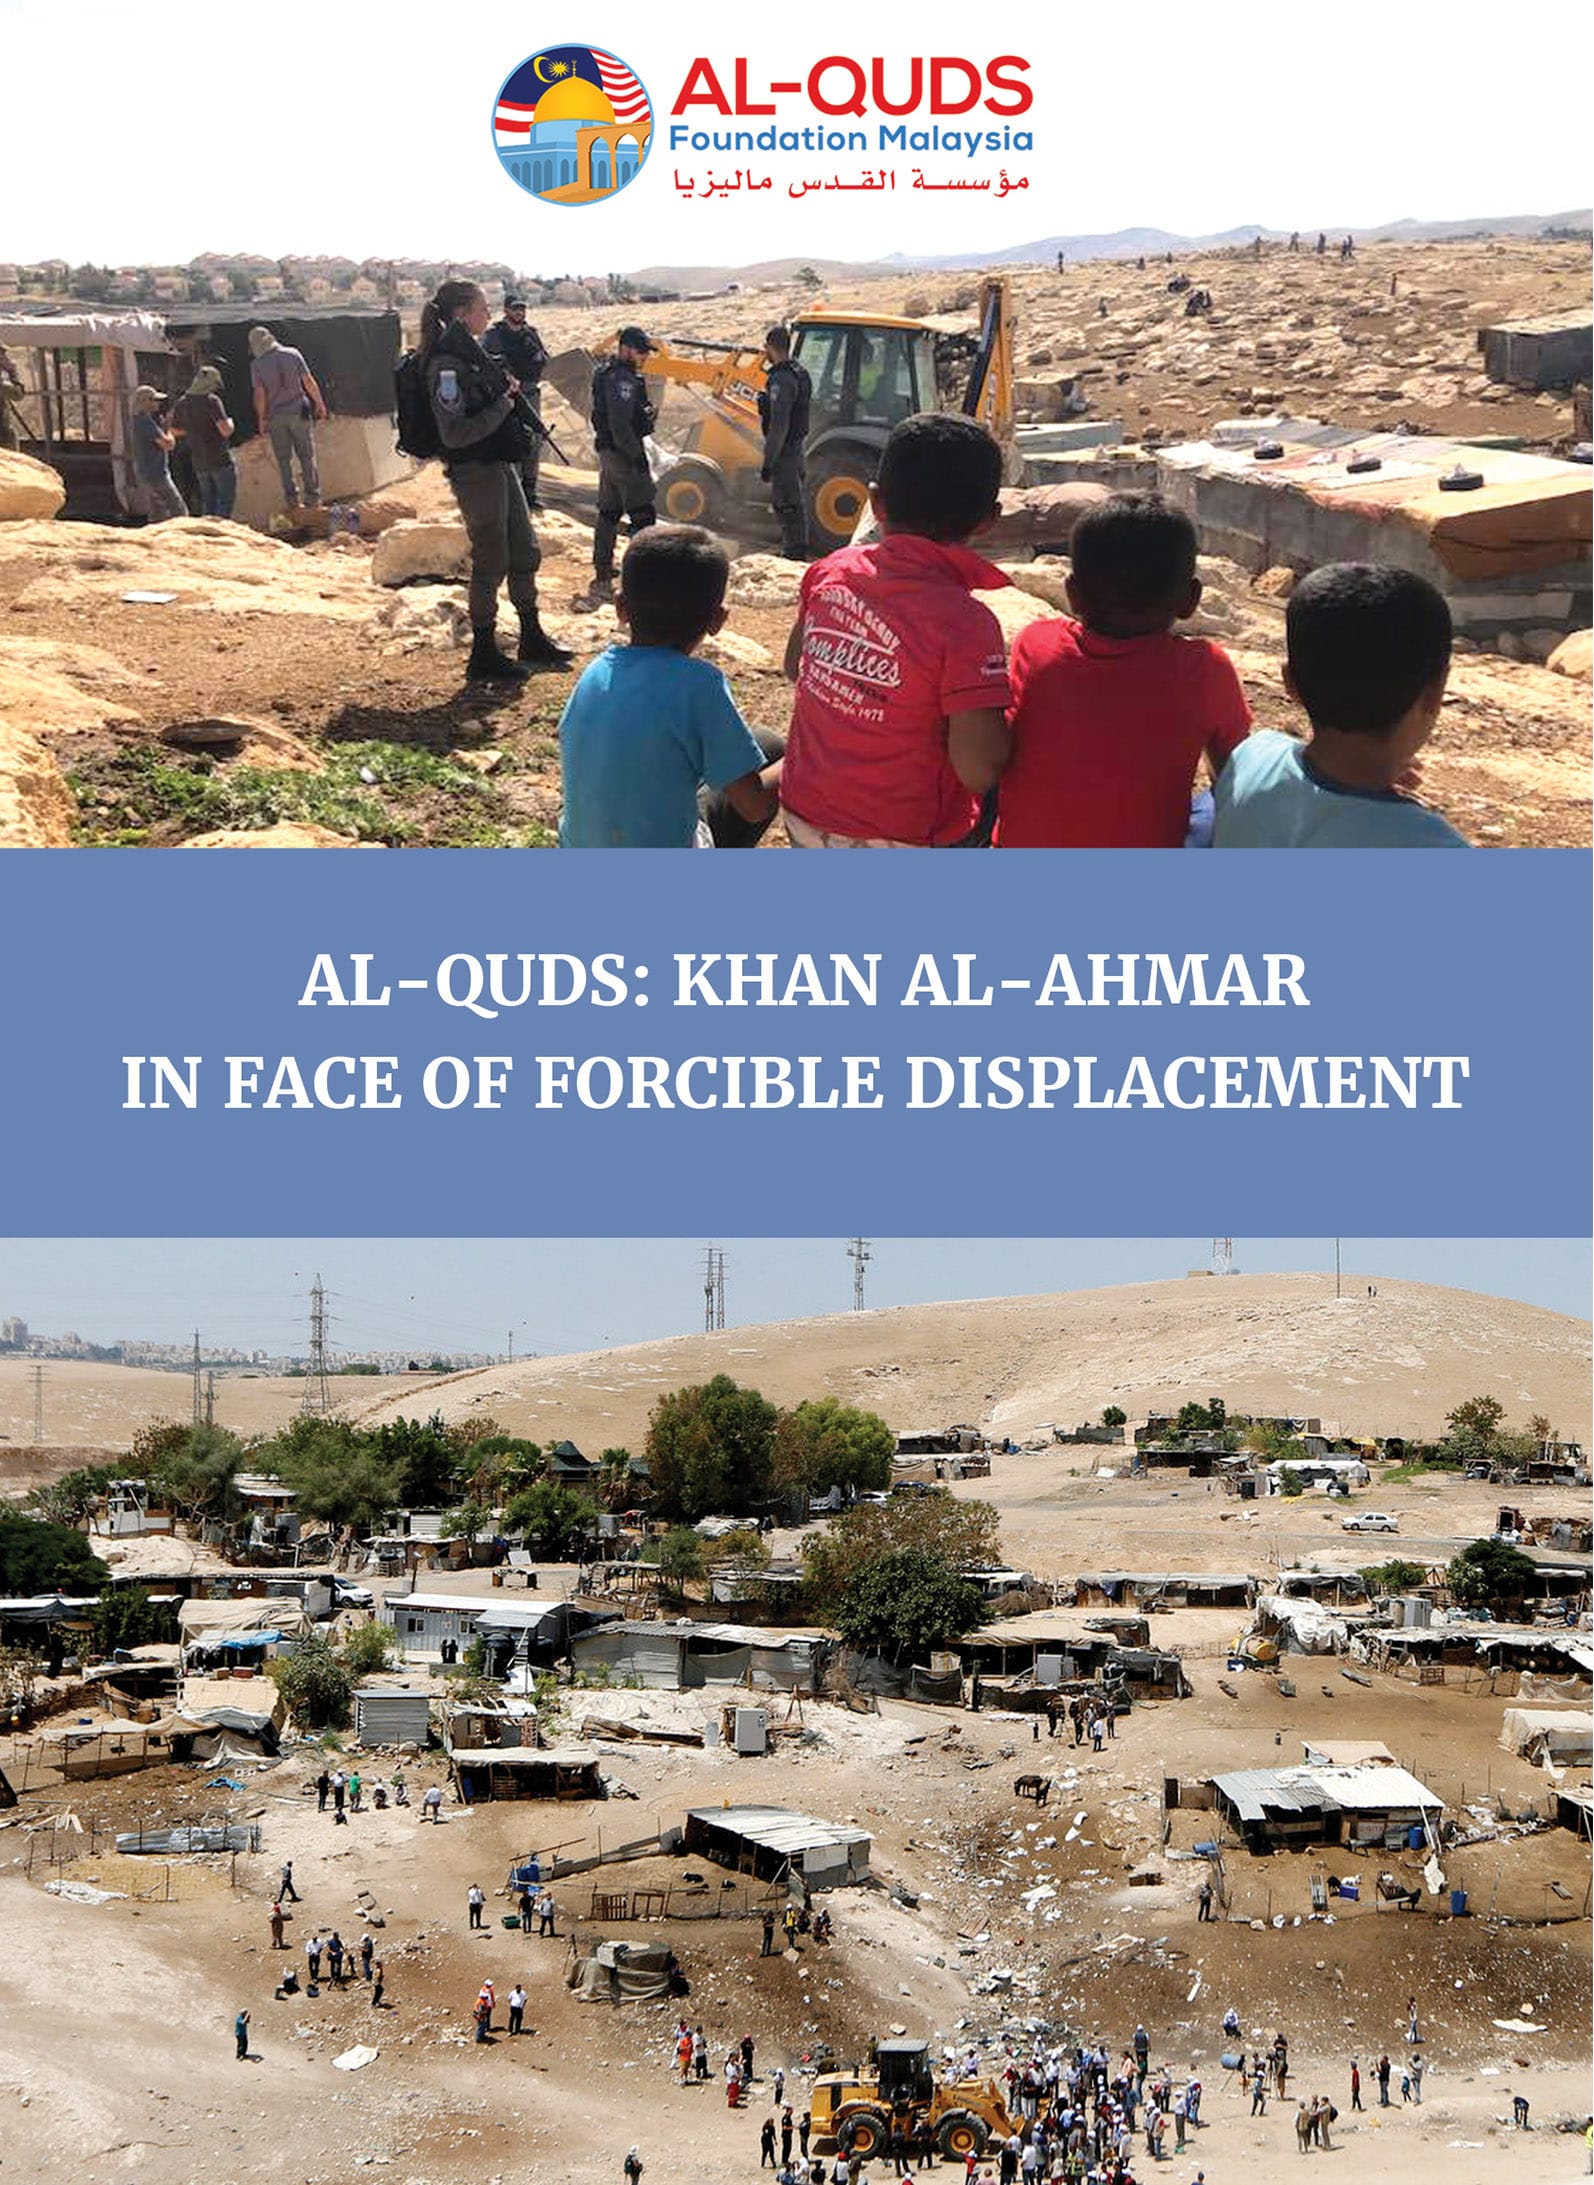 AL-QUDS: Khan al-Ahmar in Face of Forcible Displacement